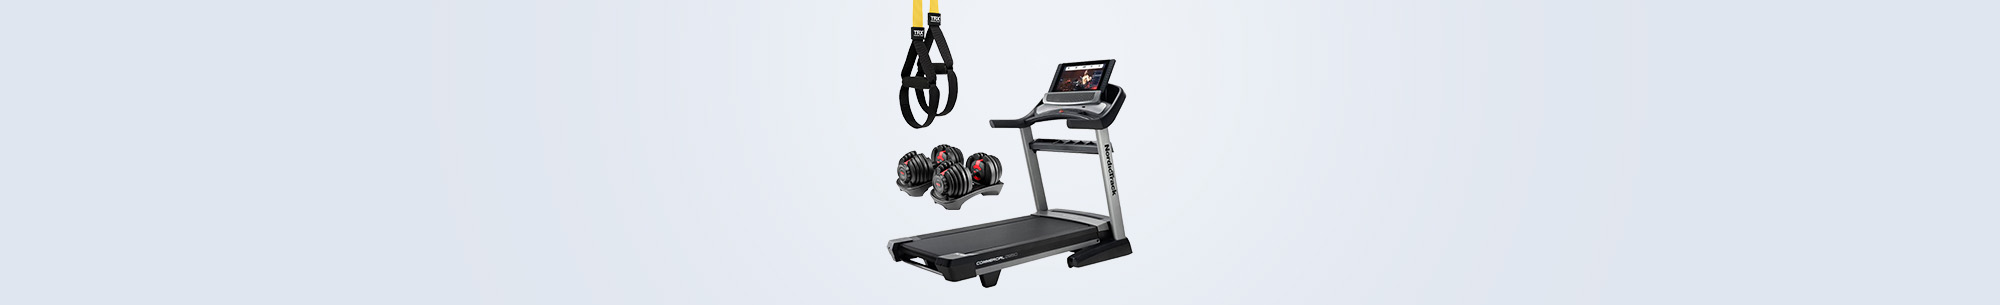 Treadmill, suspension trainer, dumbbells